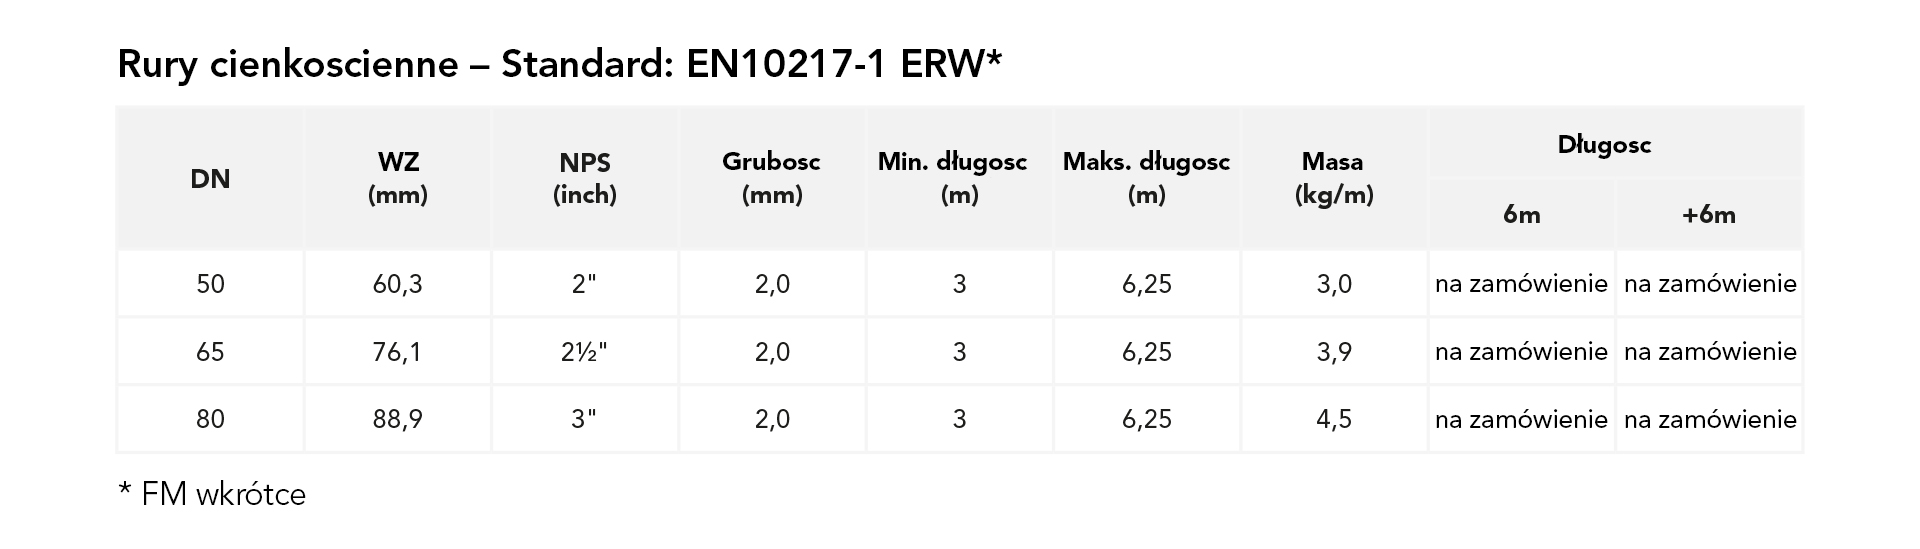 Rury cienkościenne – Standard: EN10217-1 ERW*